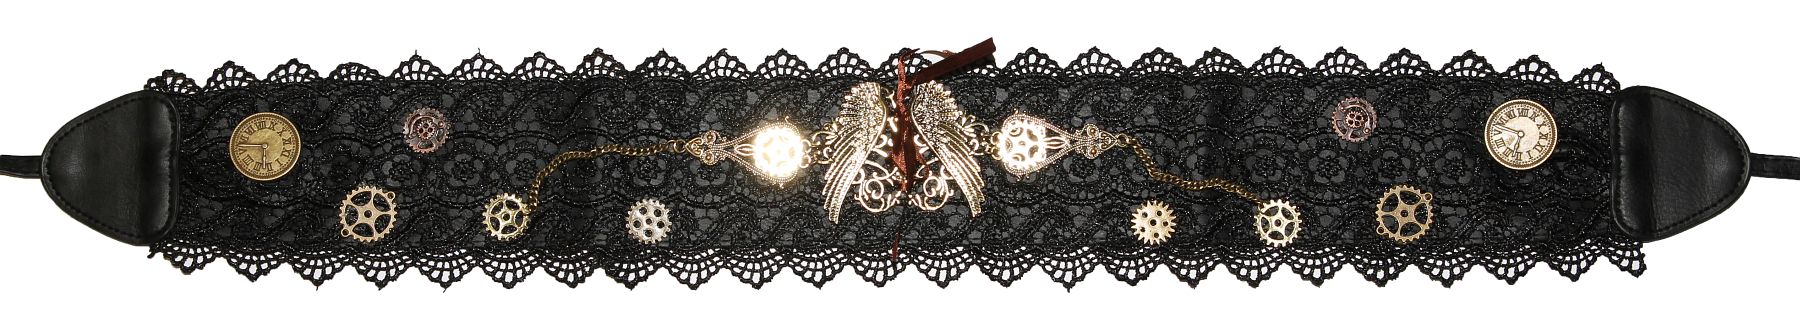 Steampunk belt black with lace